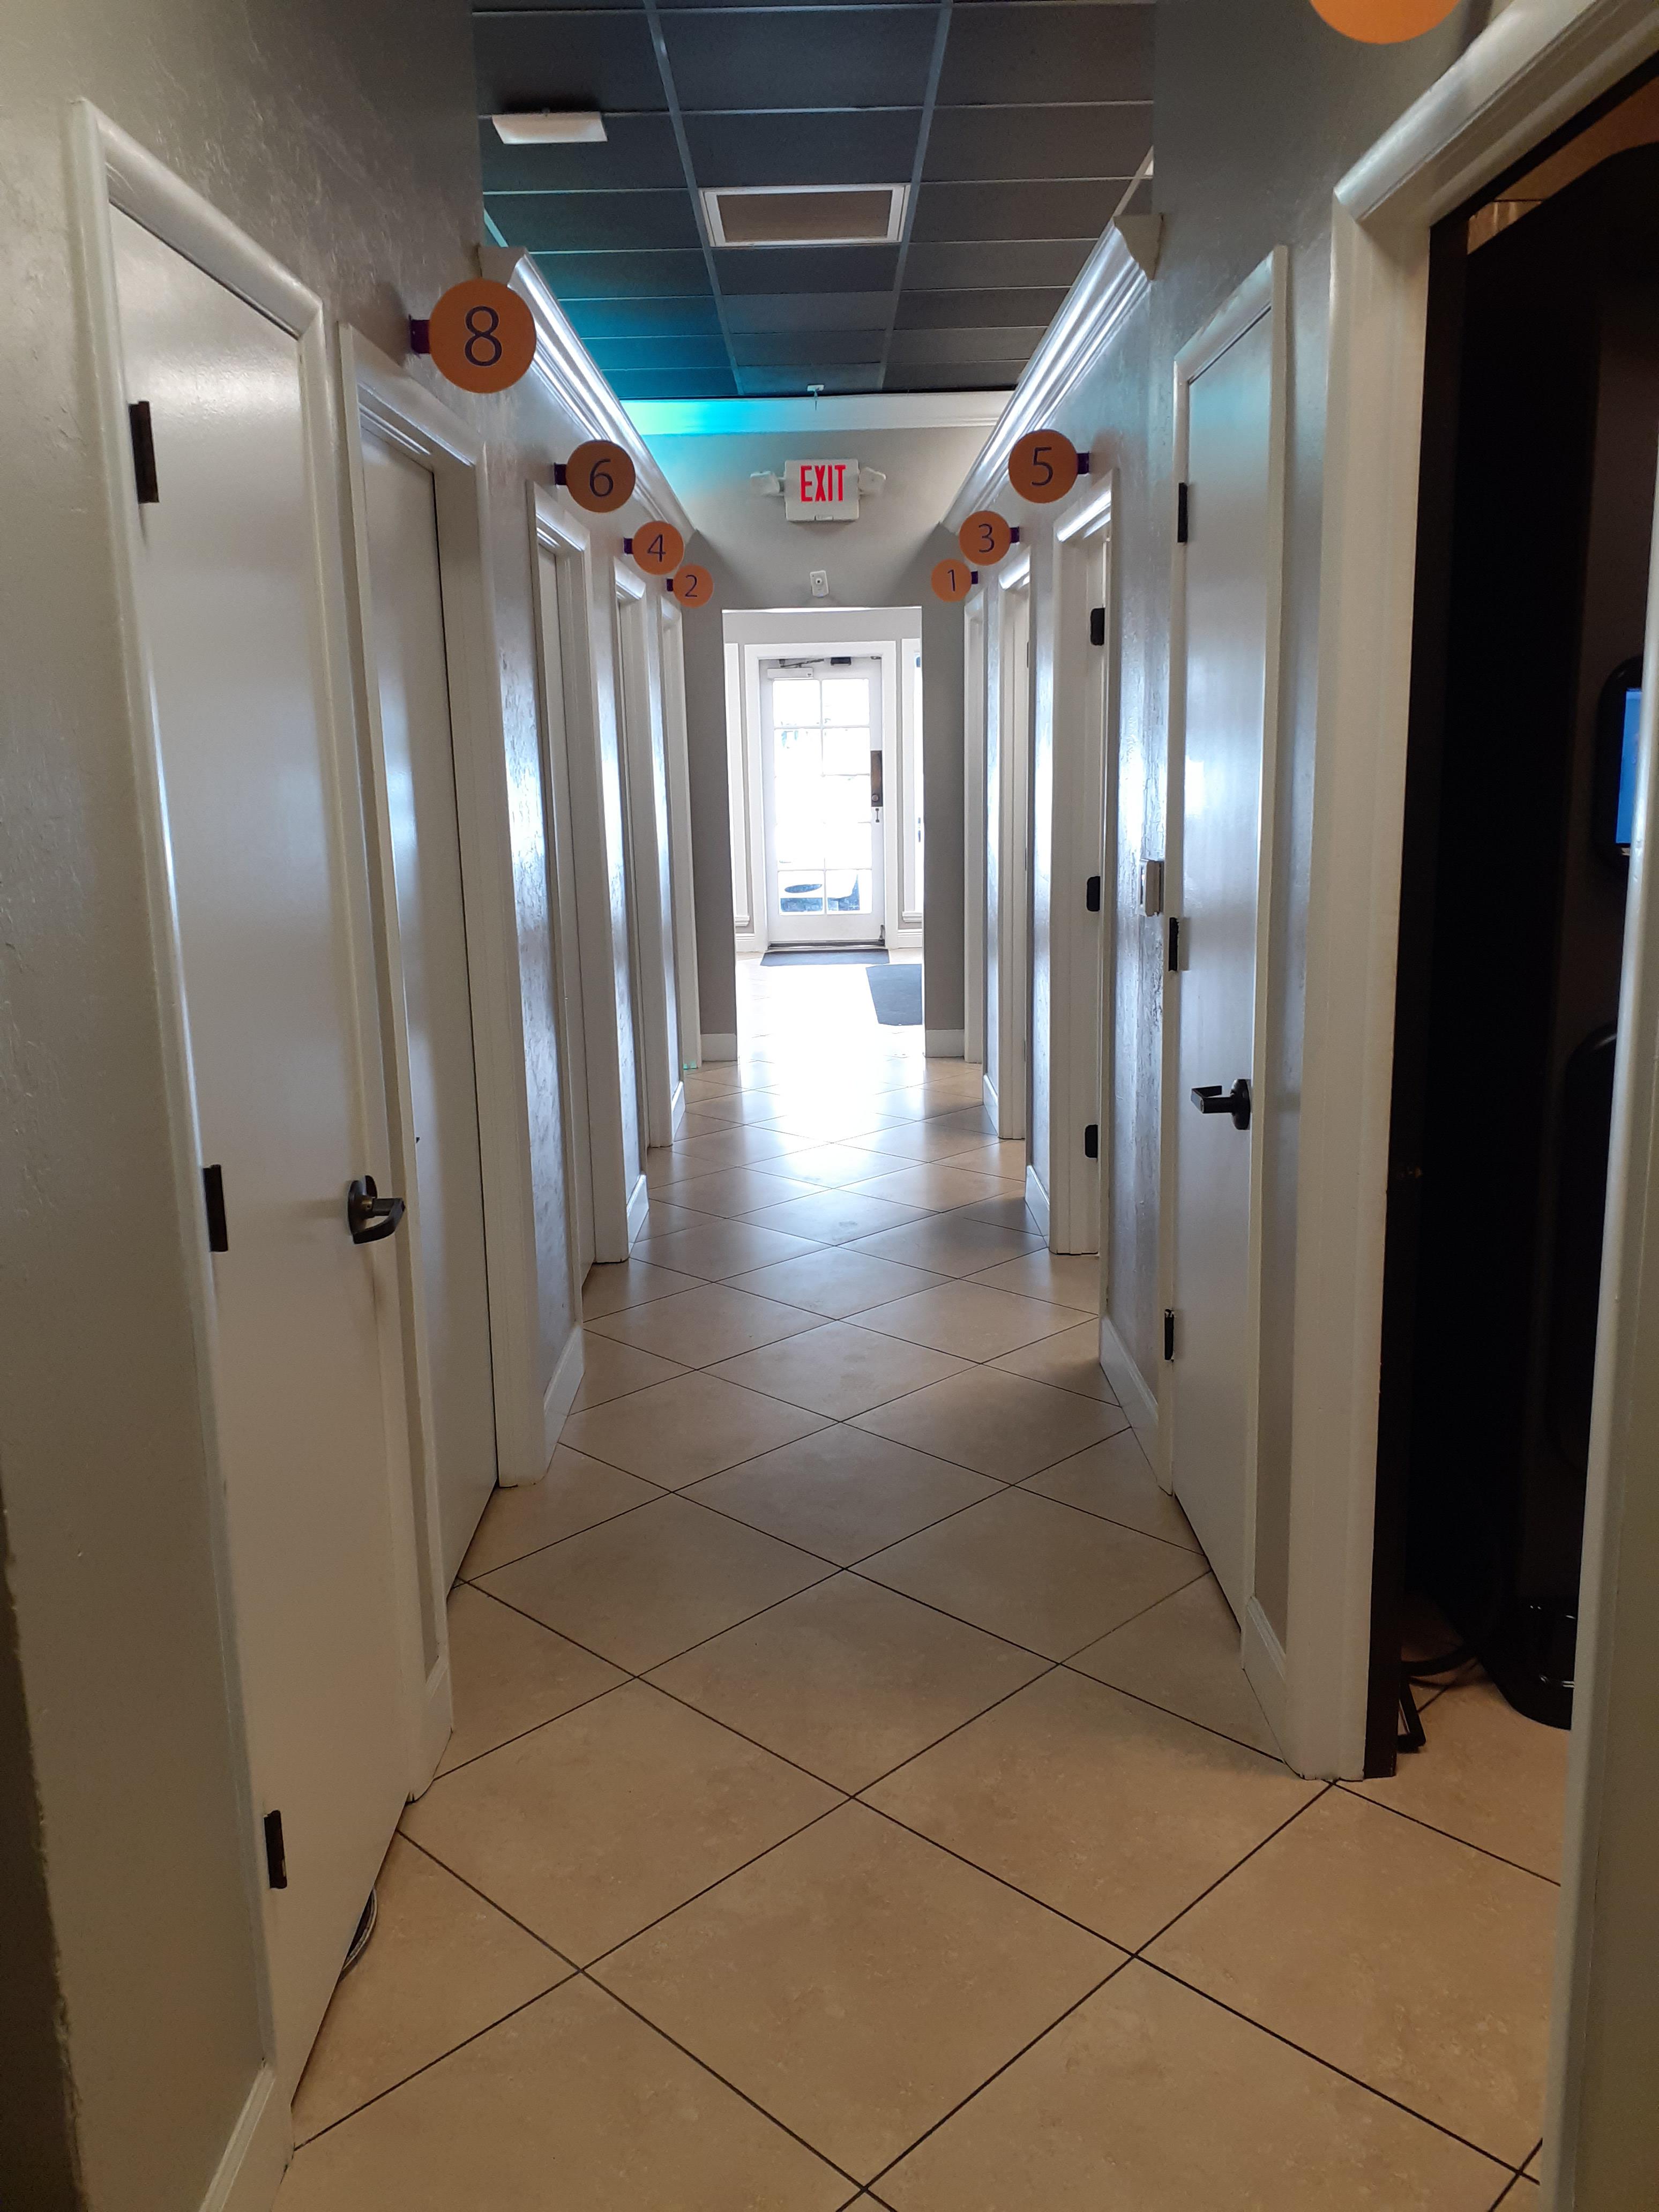 Zoom Tan hallway in Tampa, FL